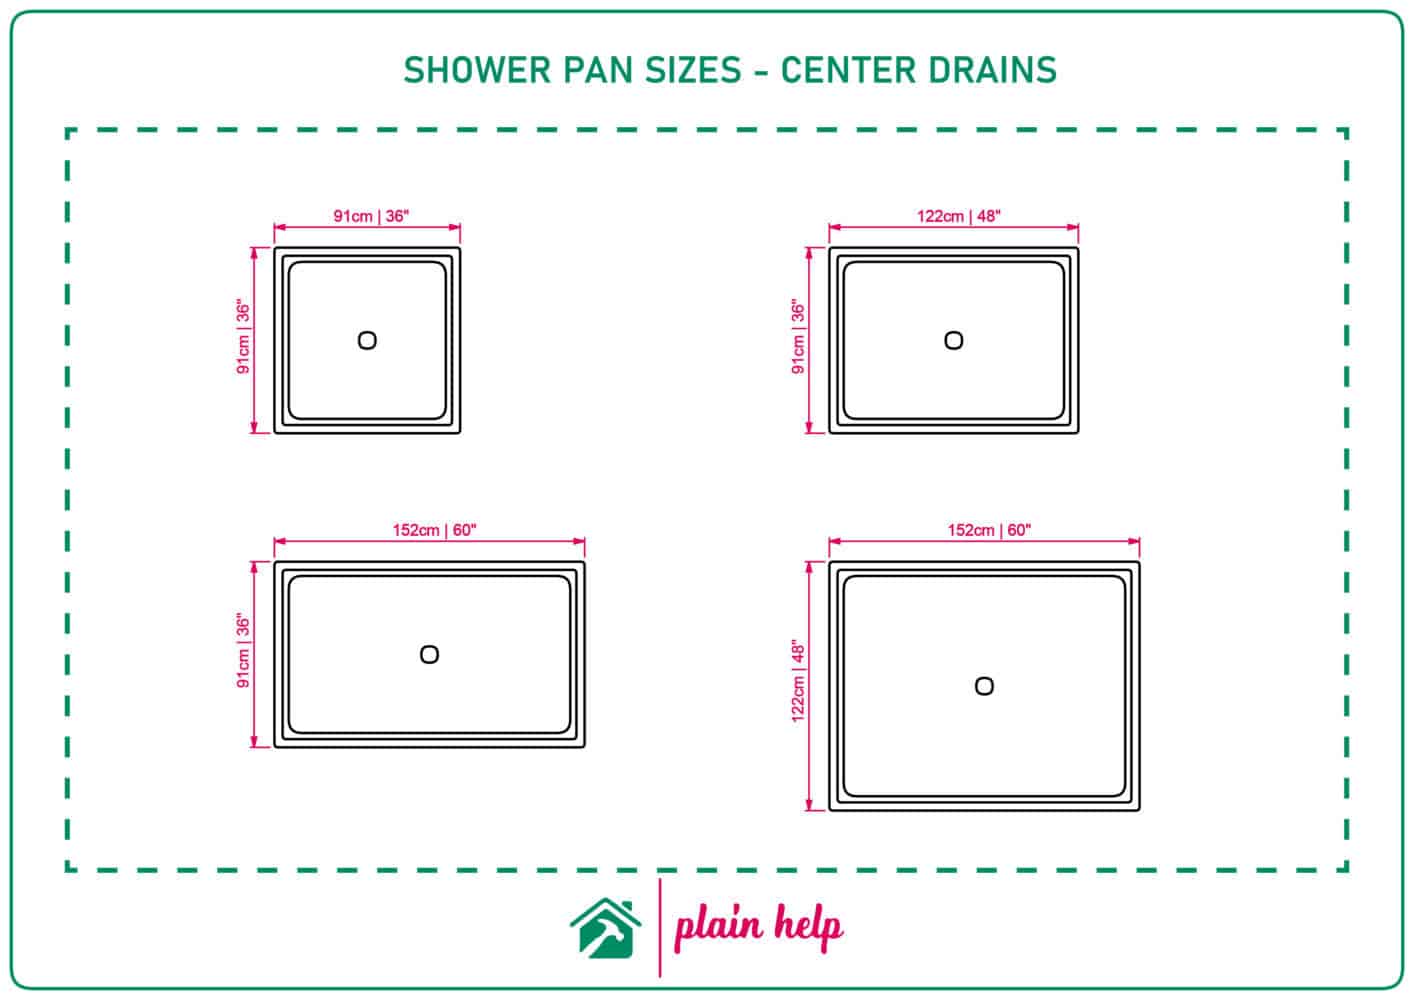 Standard shower pan sizes for center drains